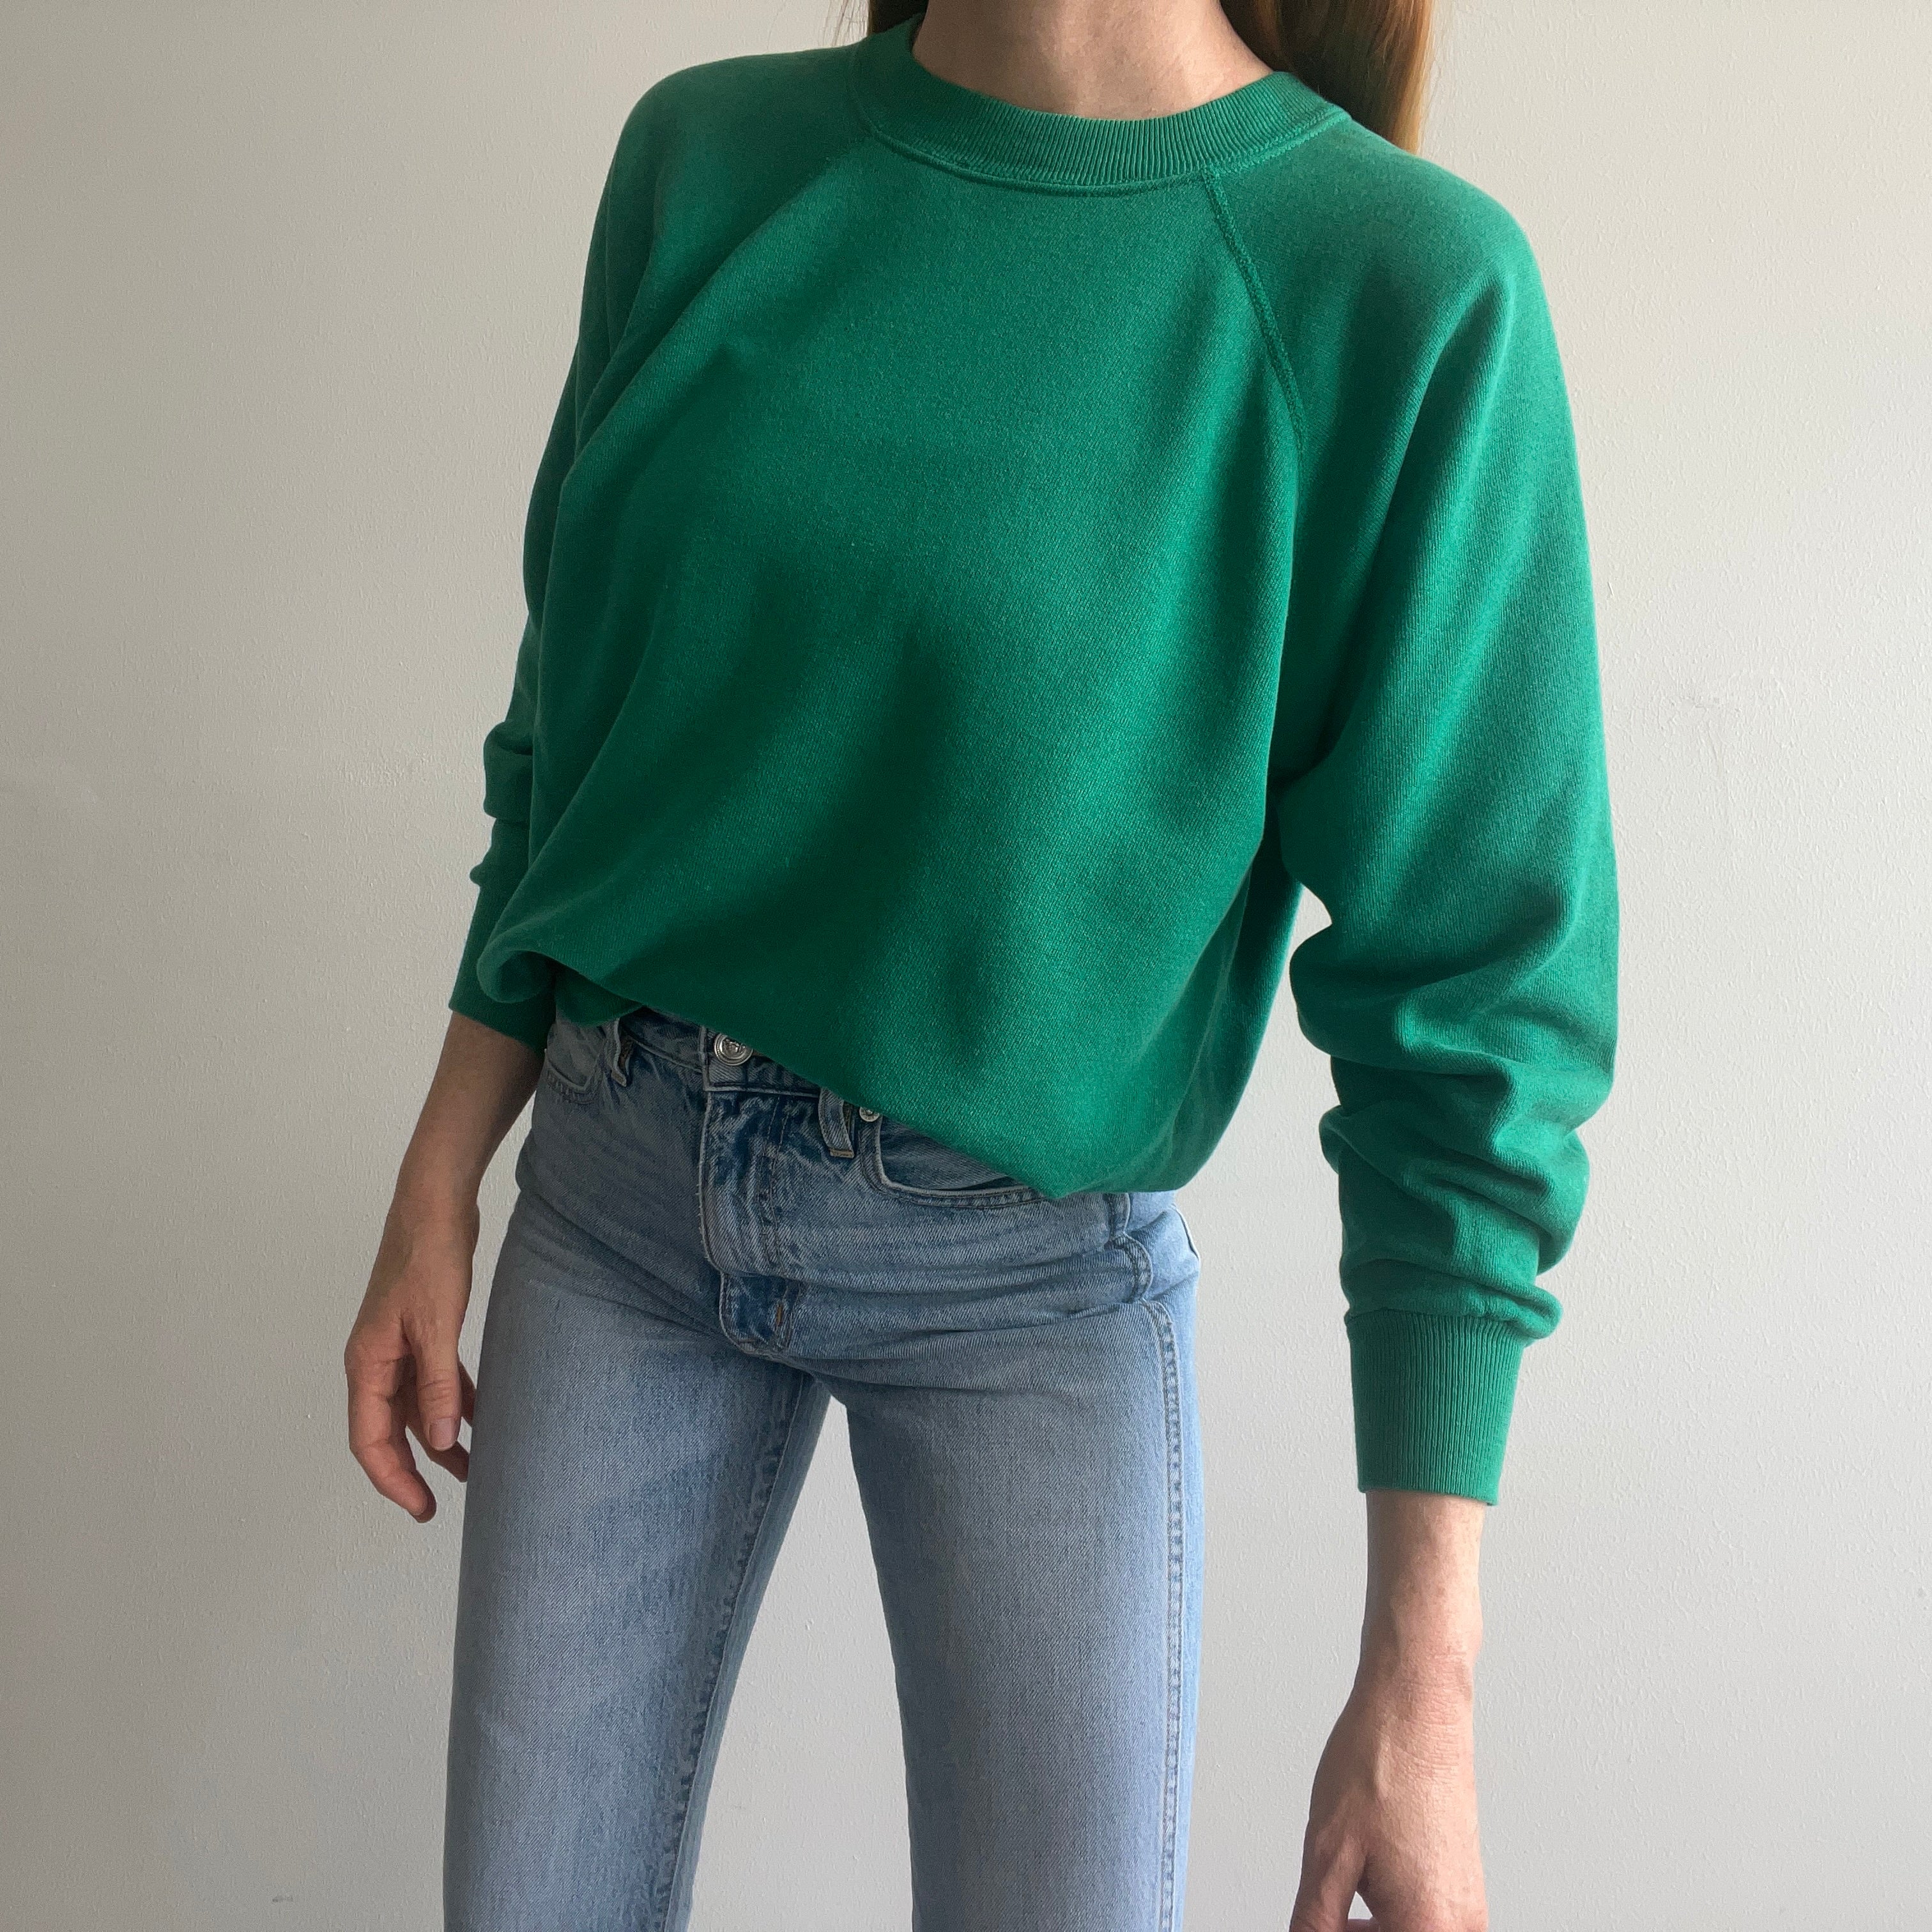 1980s Sun Faded Green Sweatshirt by Pannill (IYKYK)